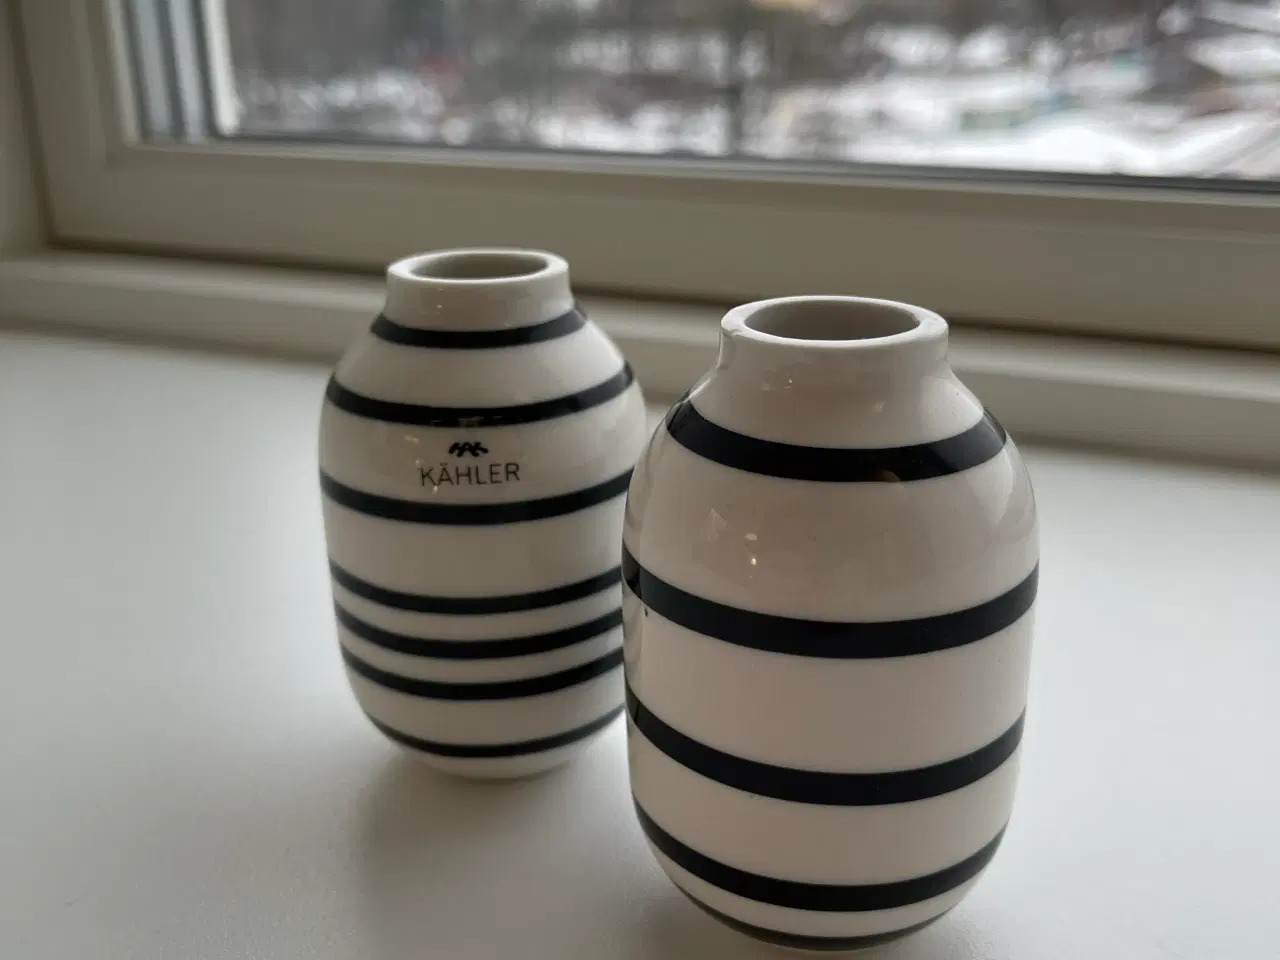 Billede 3 - Små Kähler Omaggio vaser